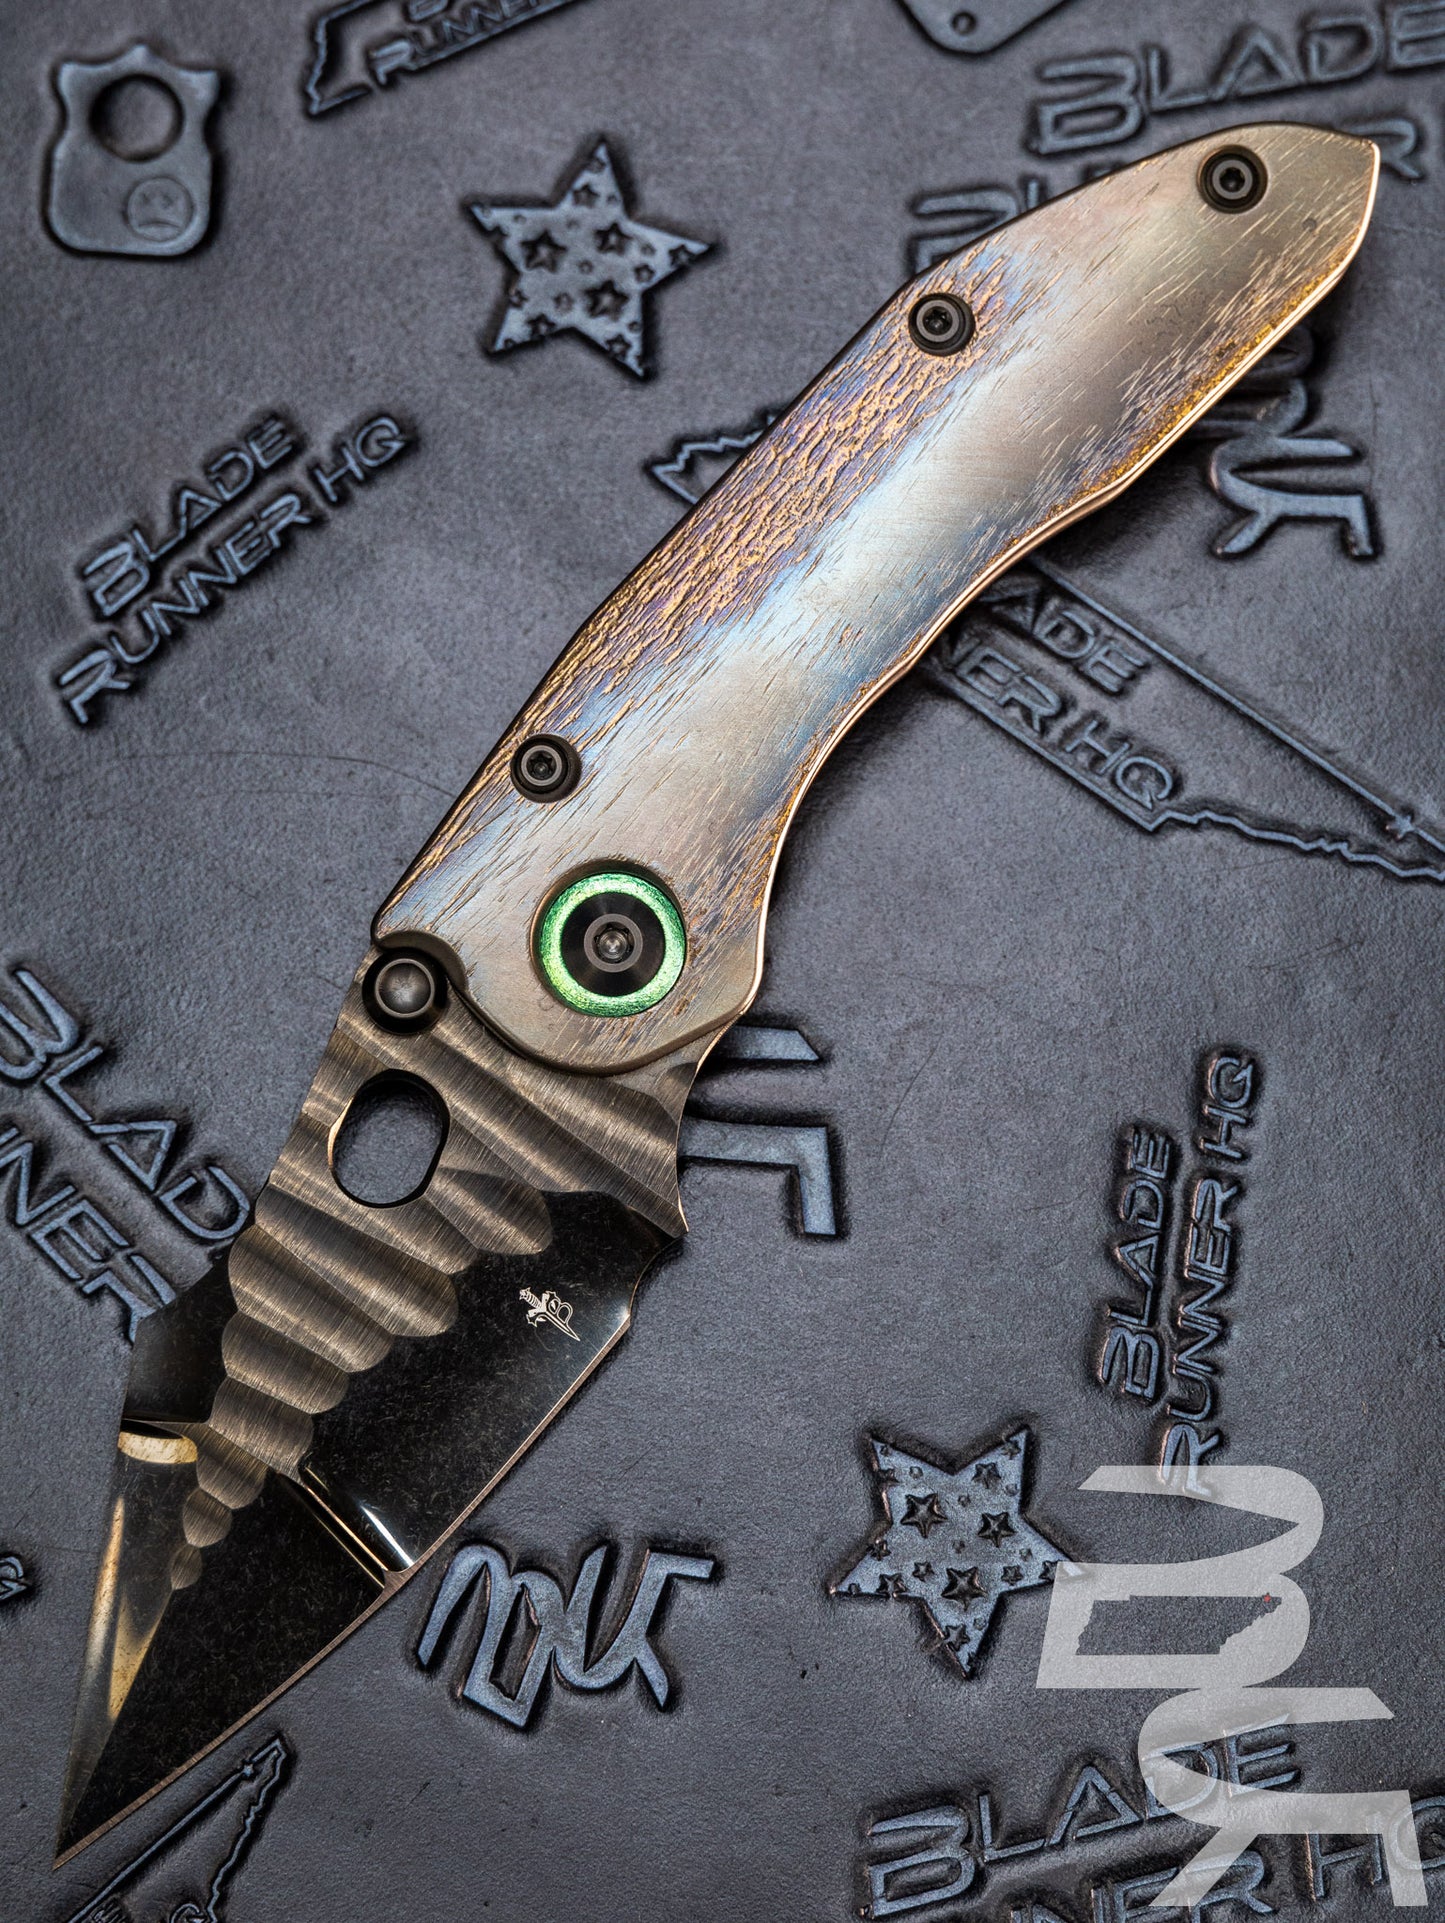 Pre Owned Marfione Custom Knives & Borka Blades Stitch w/ DLC Cracked Diamond Wash “RockStar” Rocked Double Star Grind M390 & Cosmic Titanium